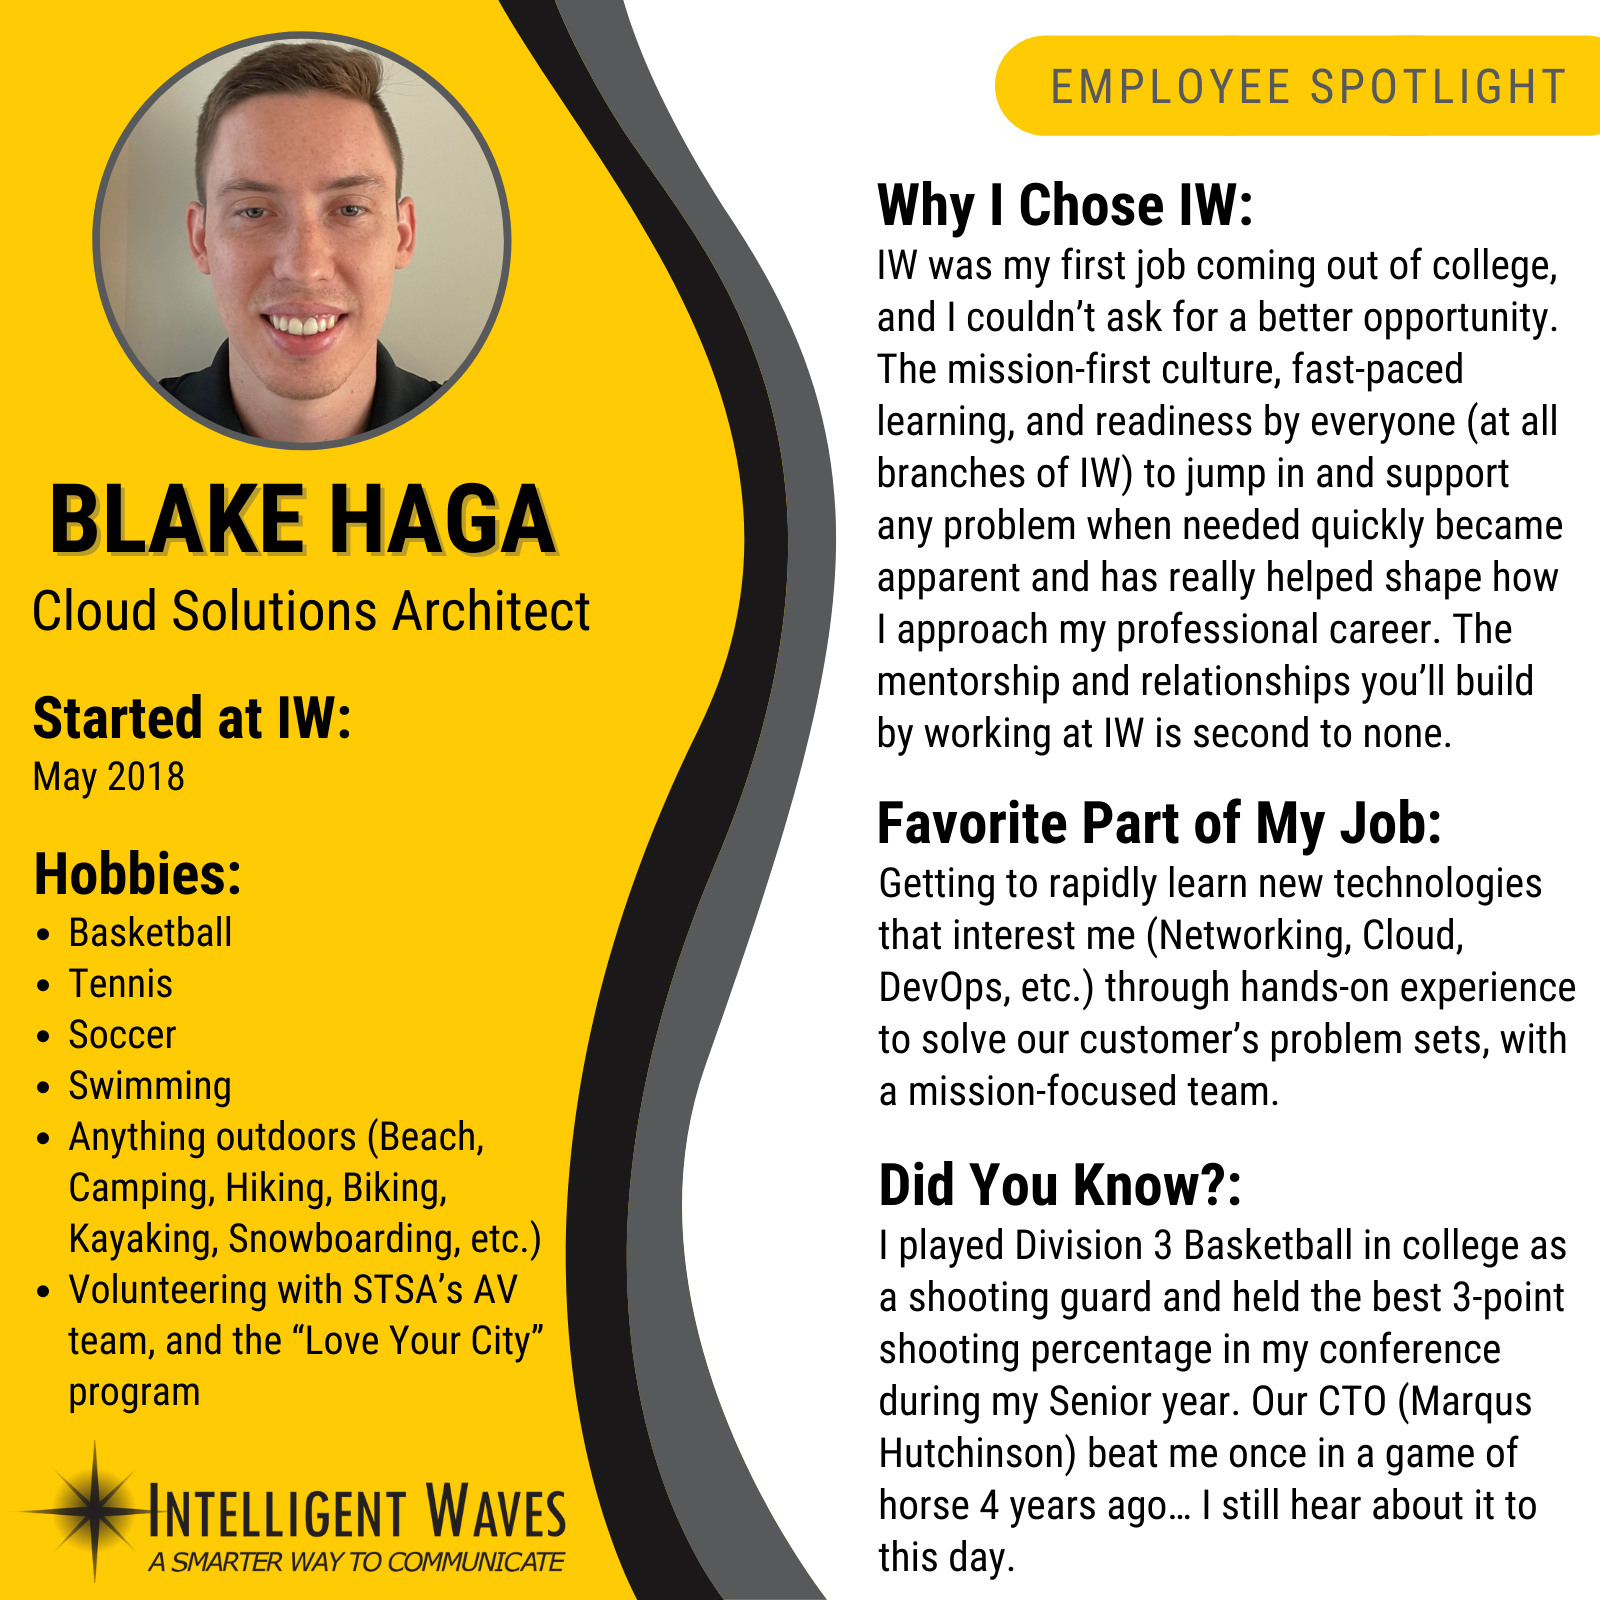 Employee Spotlight - Blake Haga